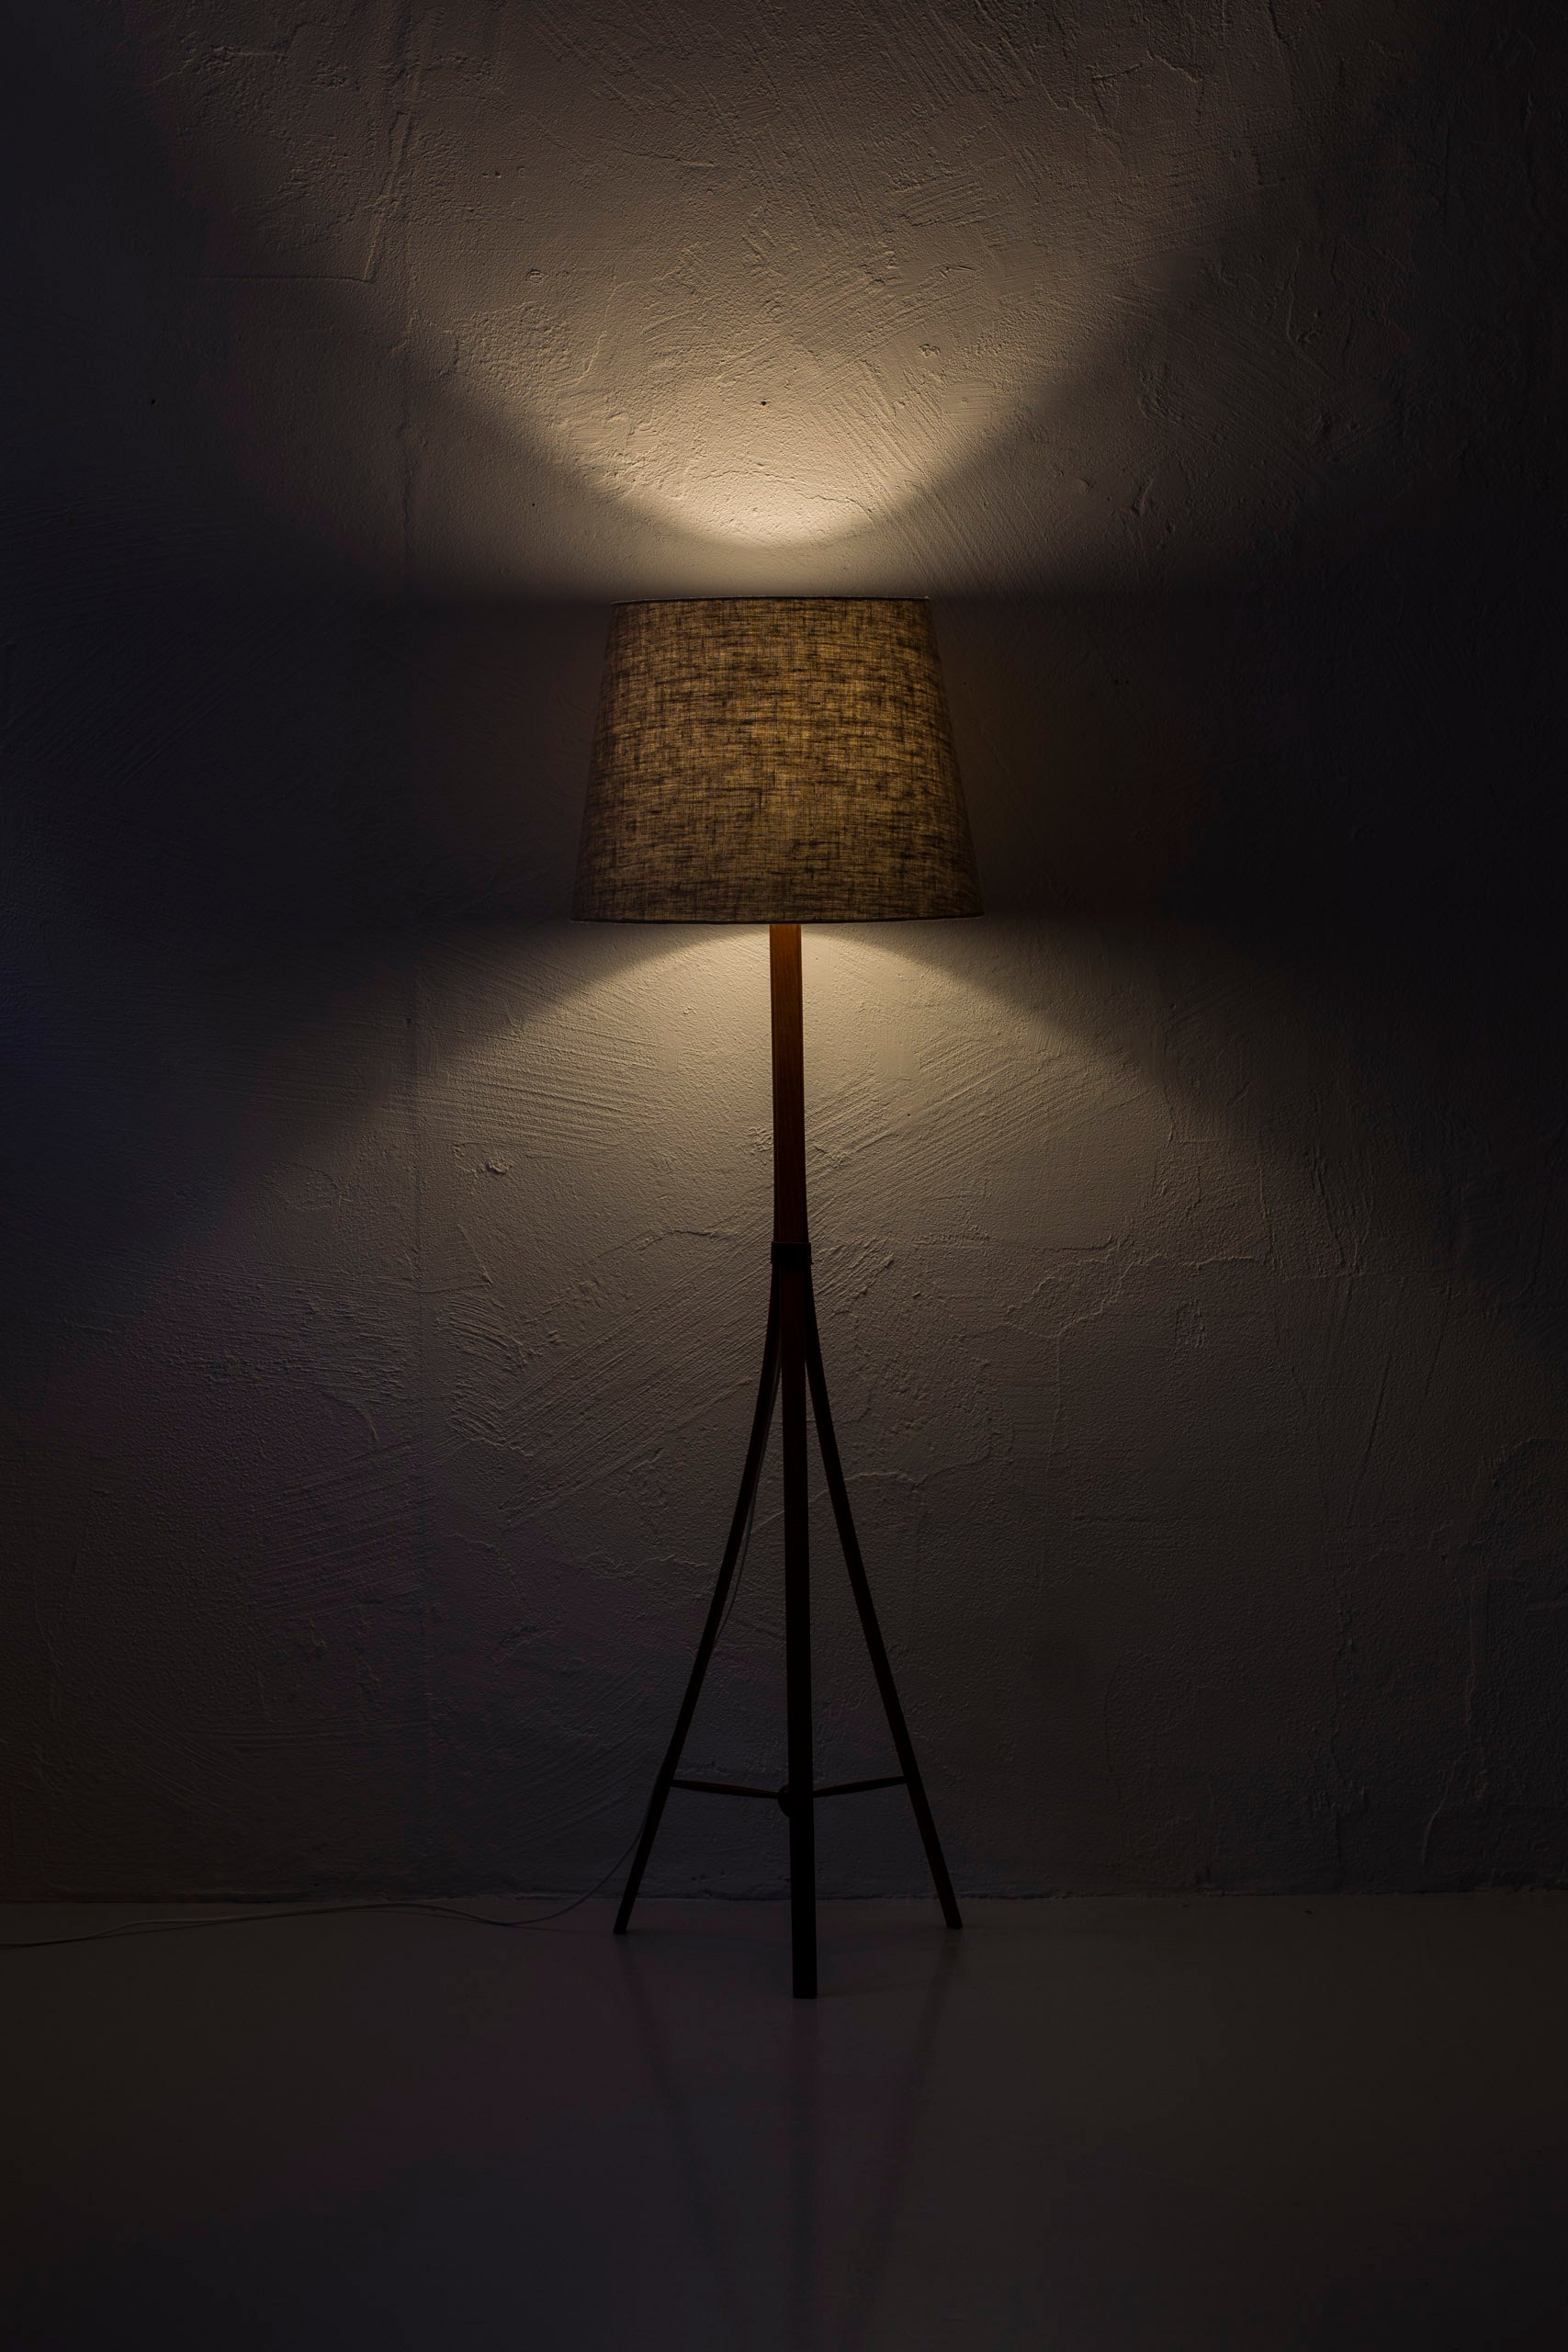 G-35 floor lamp by Alf Svensson